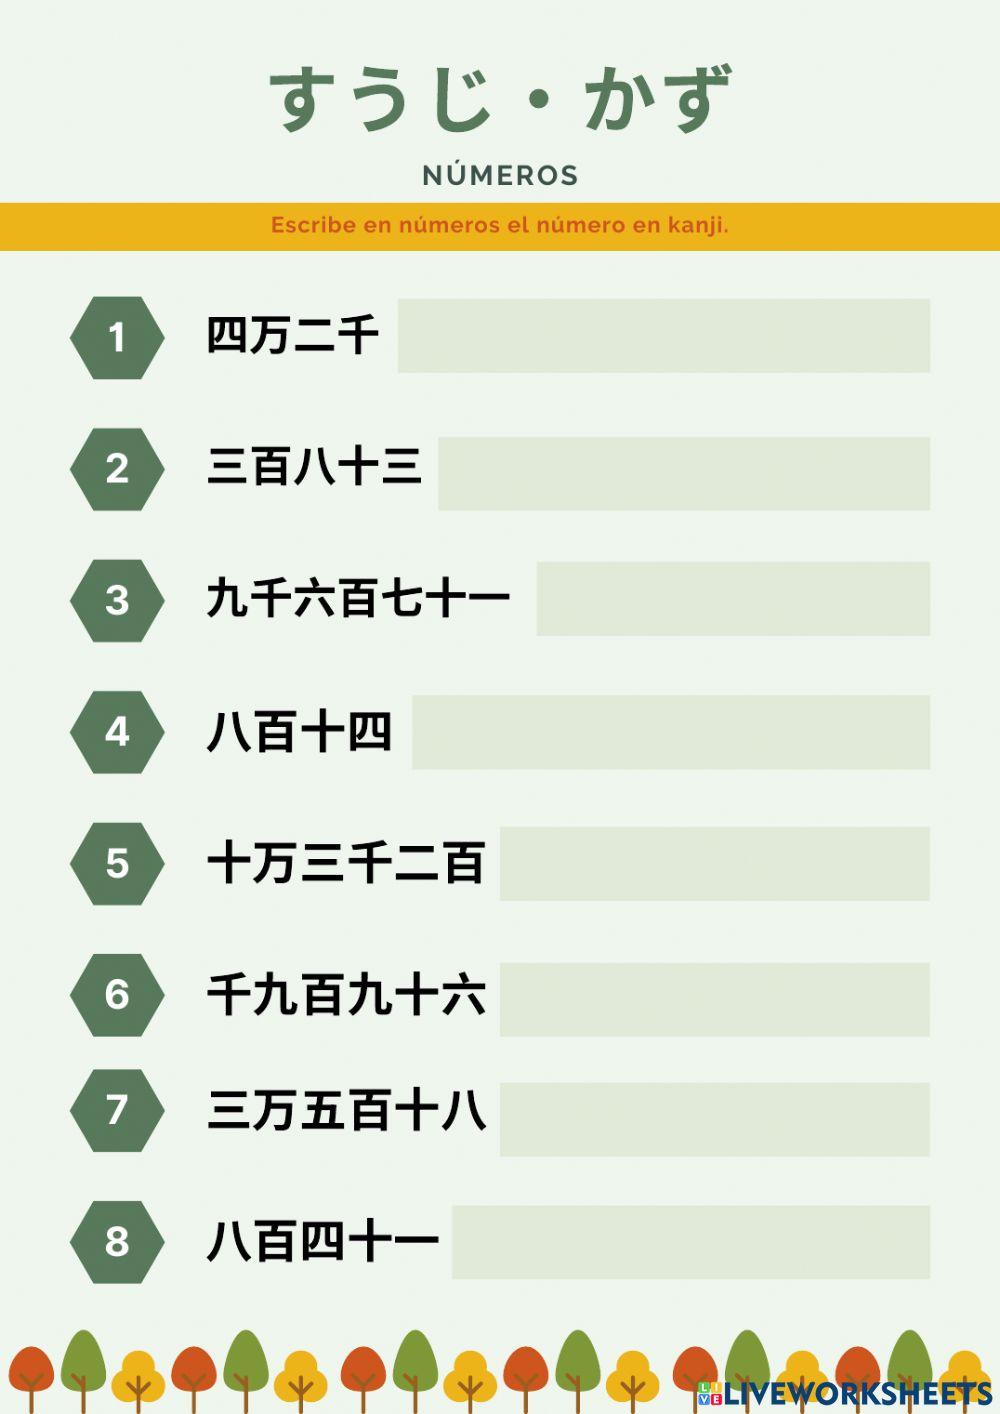 Práctica de números grandes en japonés